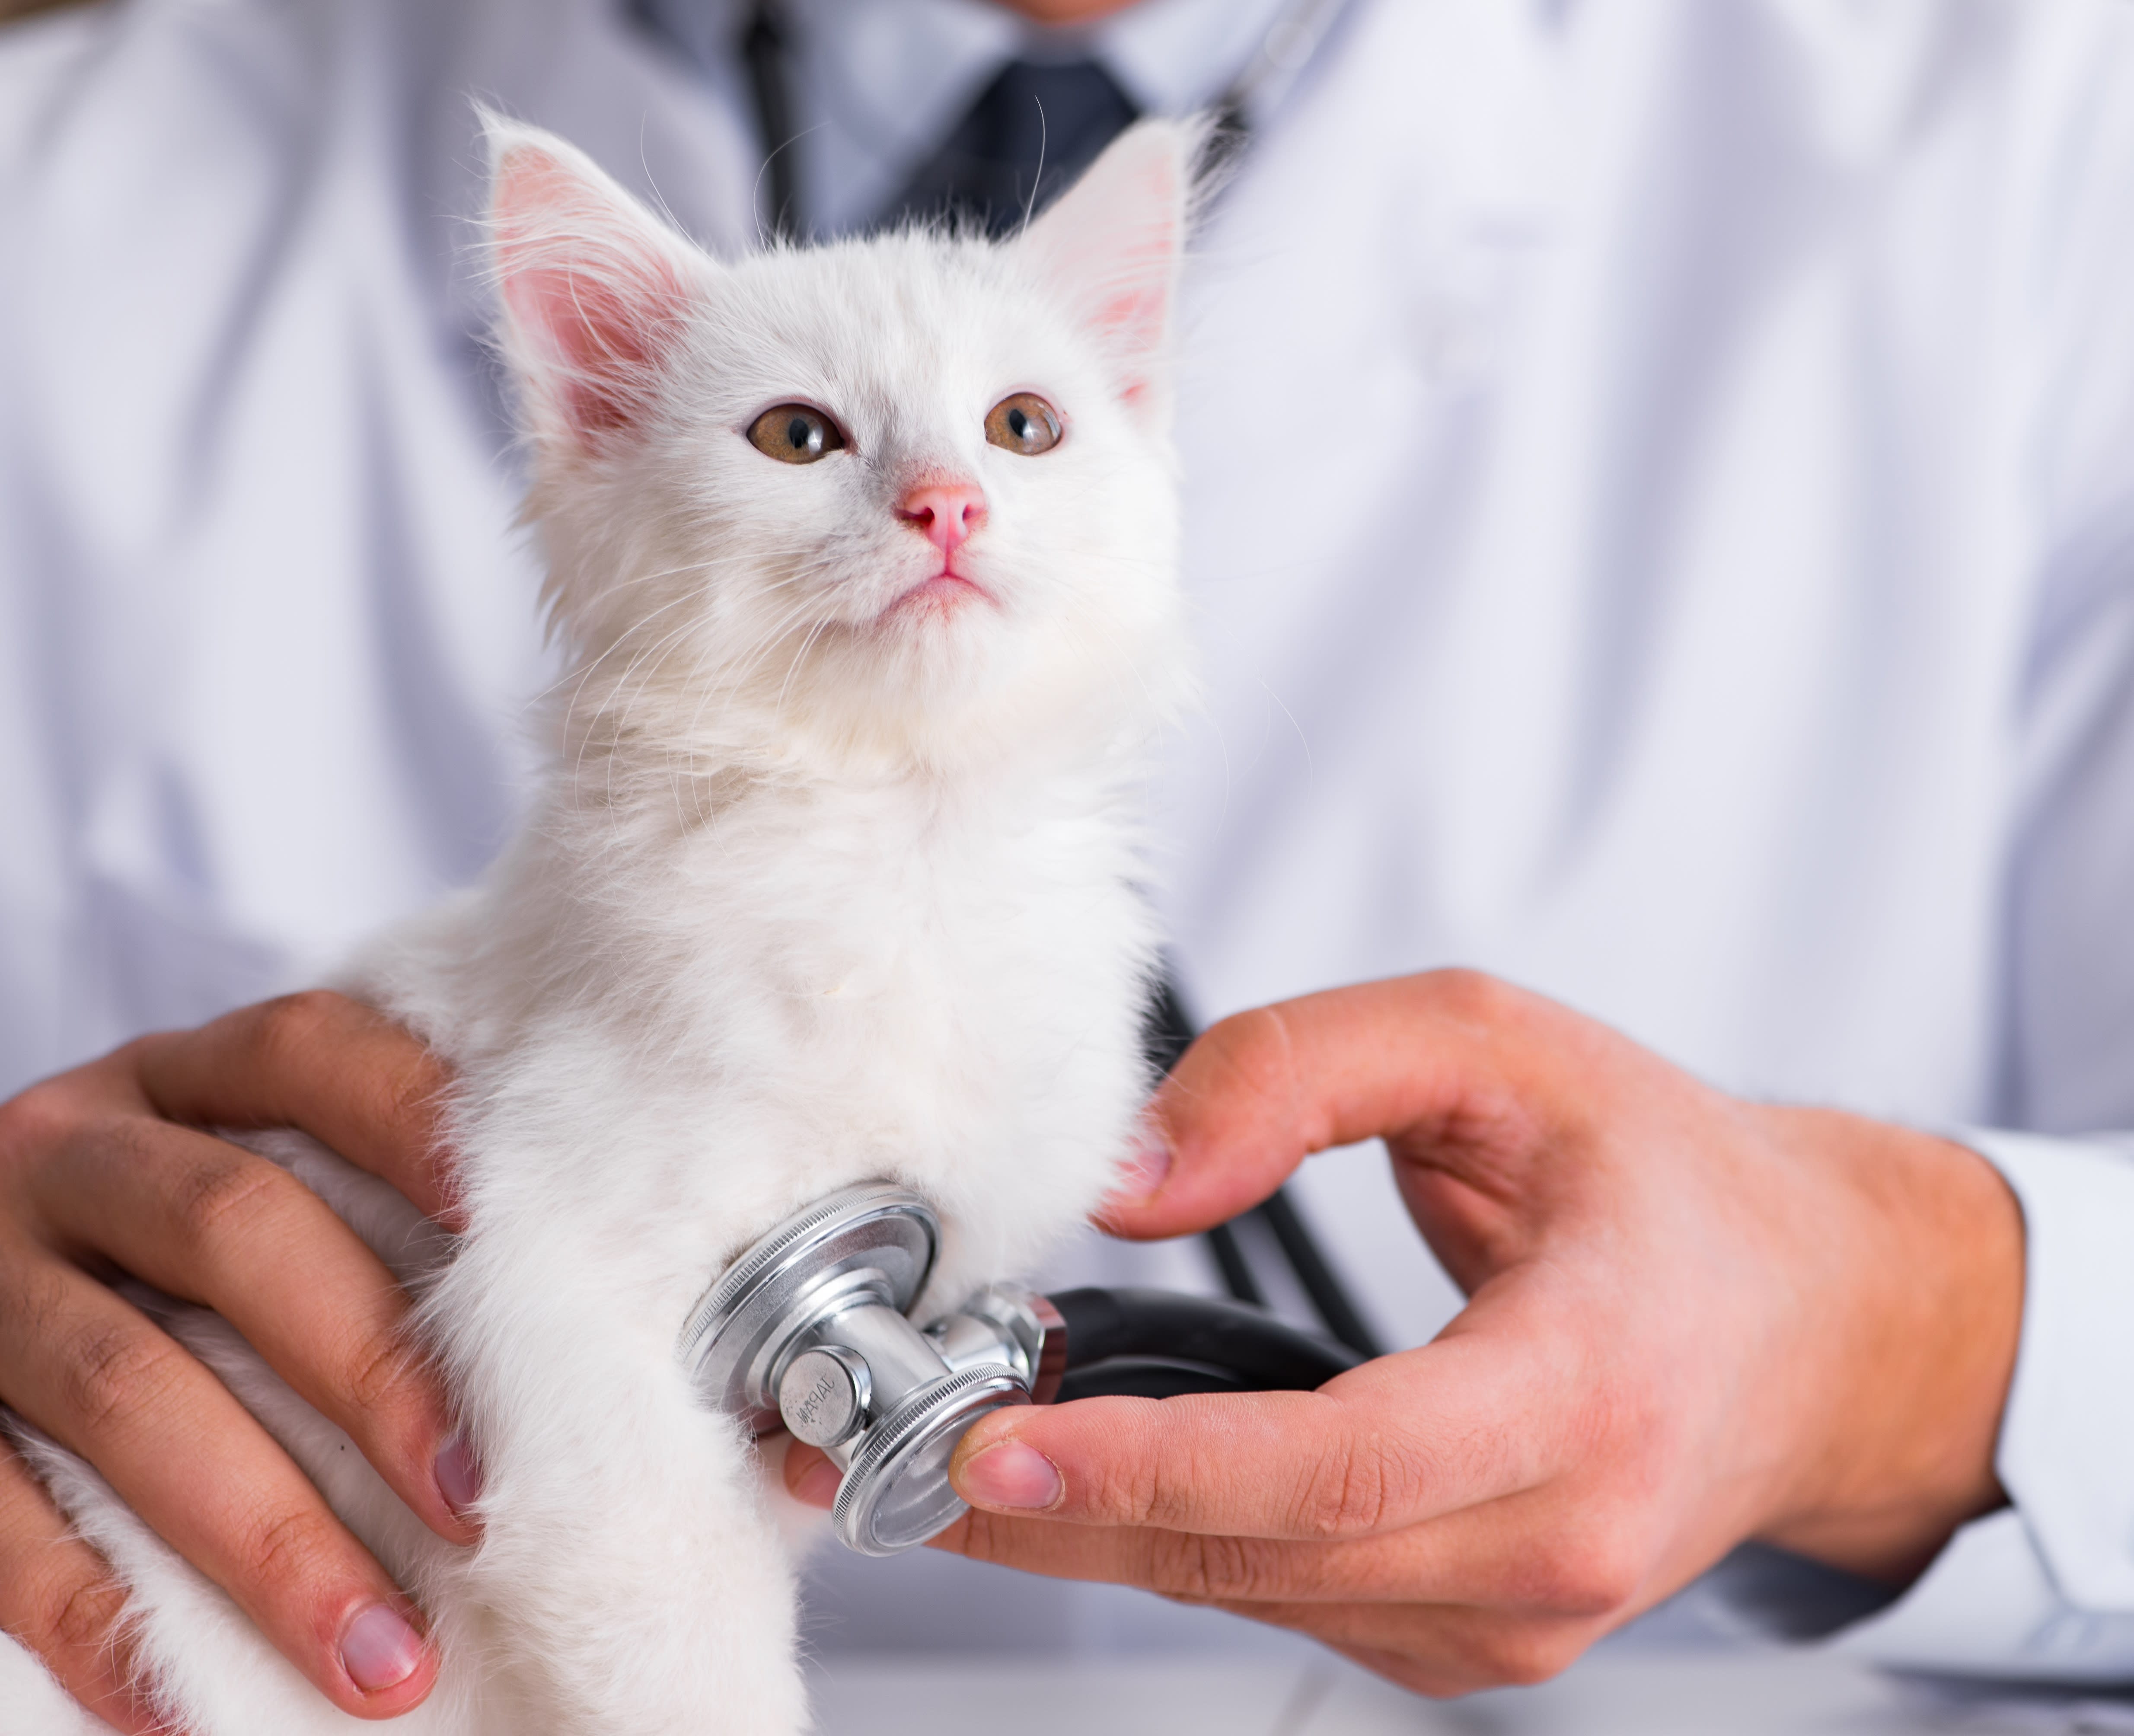 kitten first visit to vet cost